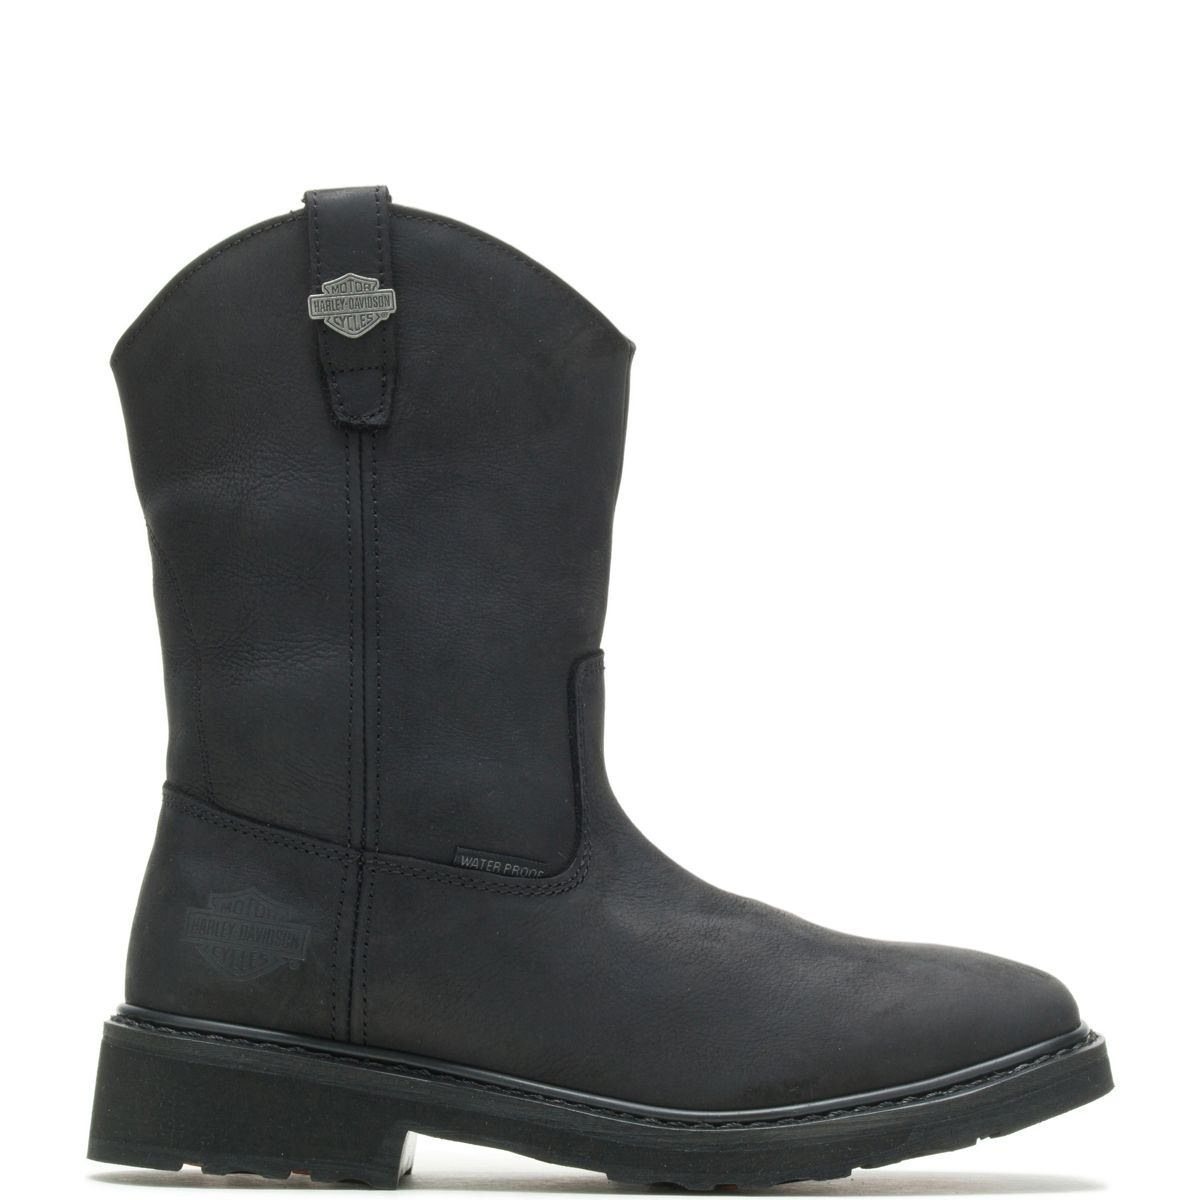 HARLEY-DAVIDSON WORK Men's Altman Western Classic Soft Toe Work Boot Black - D93561 Black/black - Black/black, 10